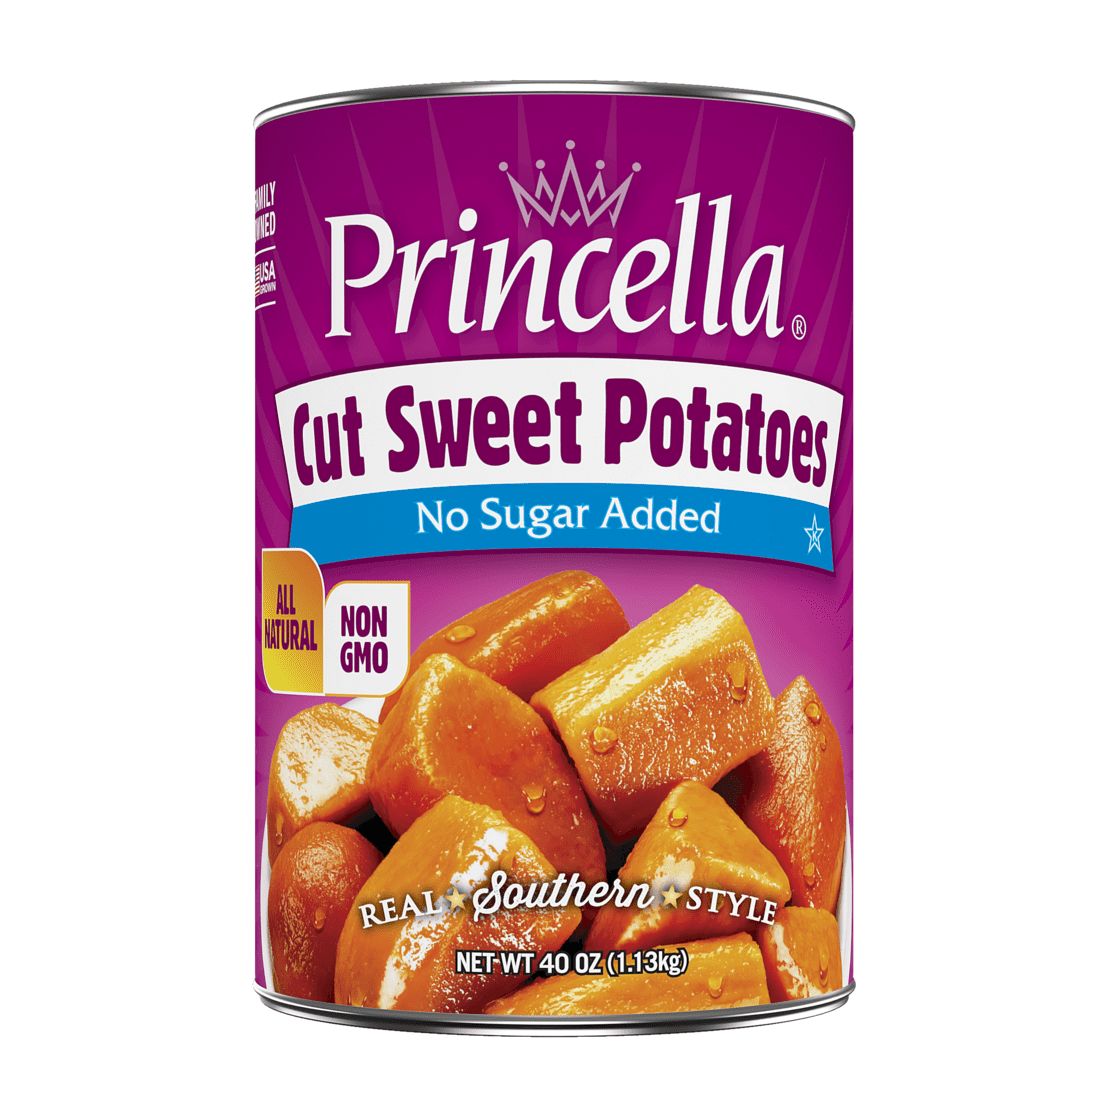 Princella Canned Cut Sweet Potatoes, No Sugar Added, 40 oz